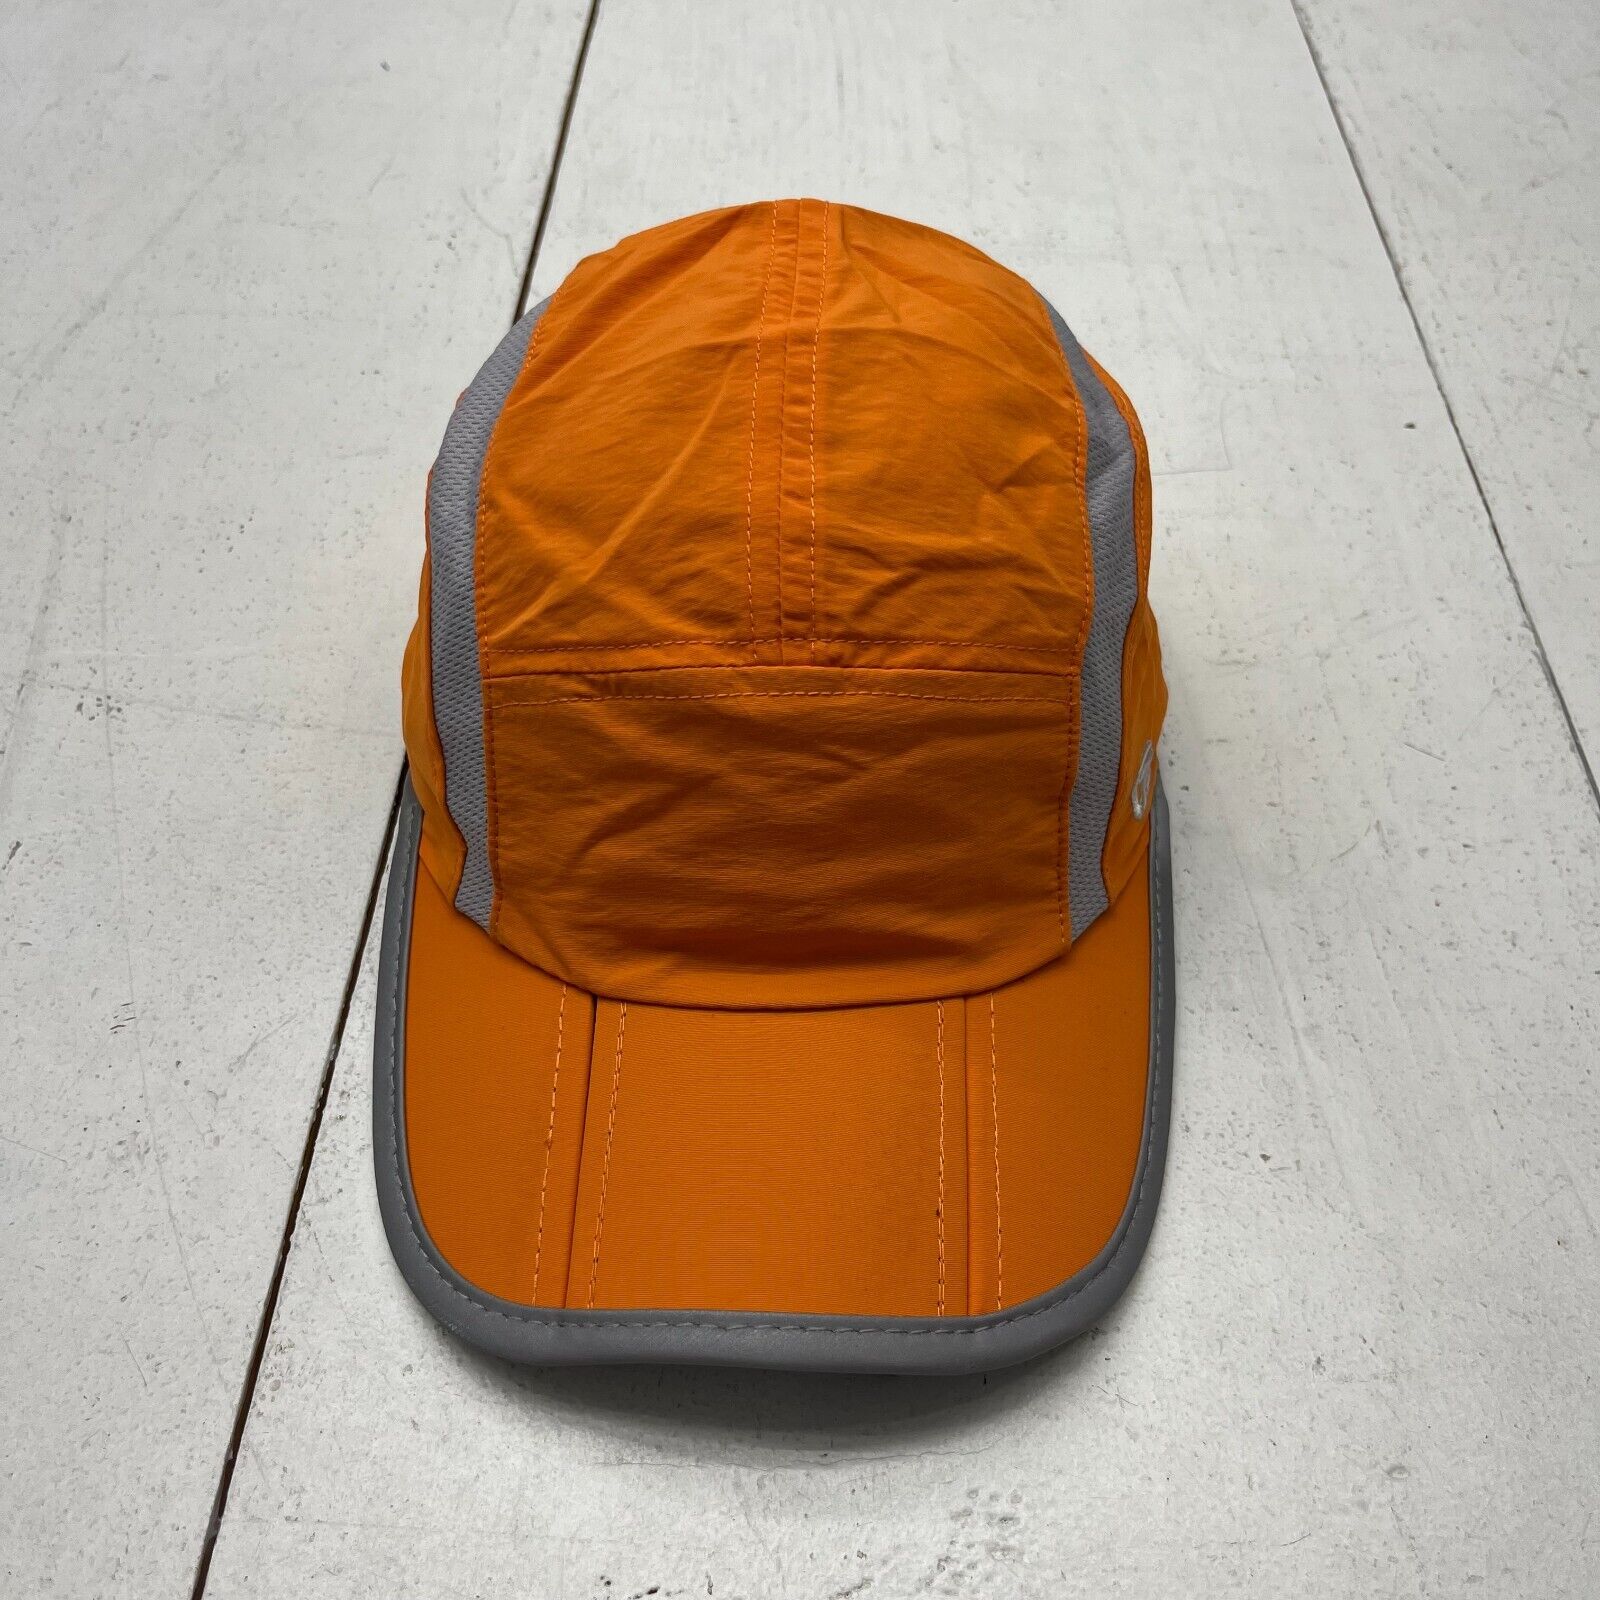 Gadiemkensd Orange Reflective UPF50+ Hat Unisex Adult Size 6 7/8 - 7 1/2 NEW